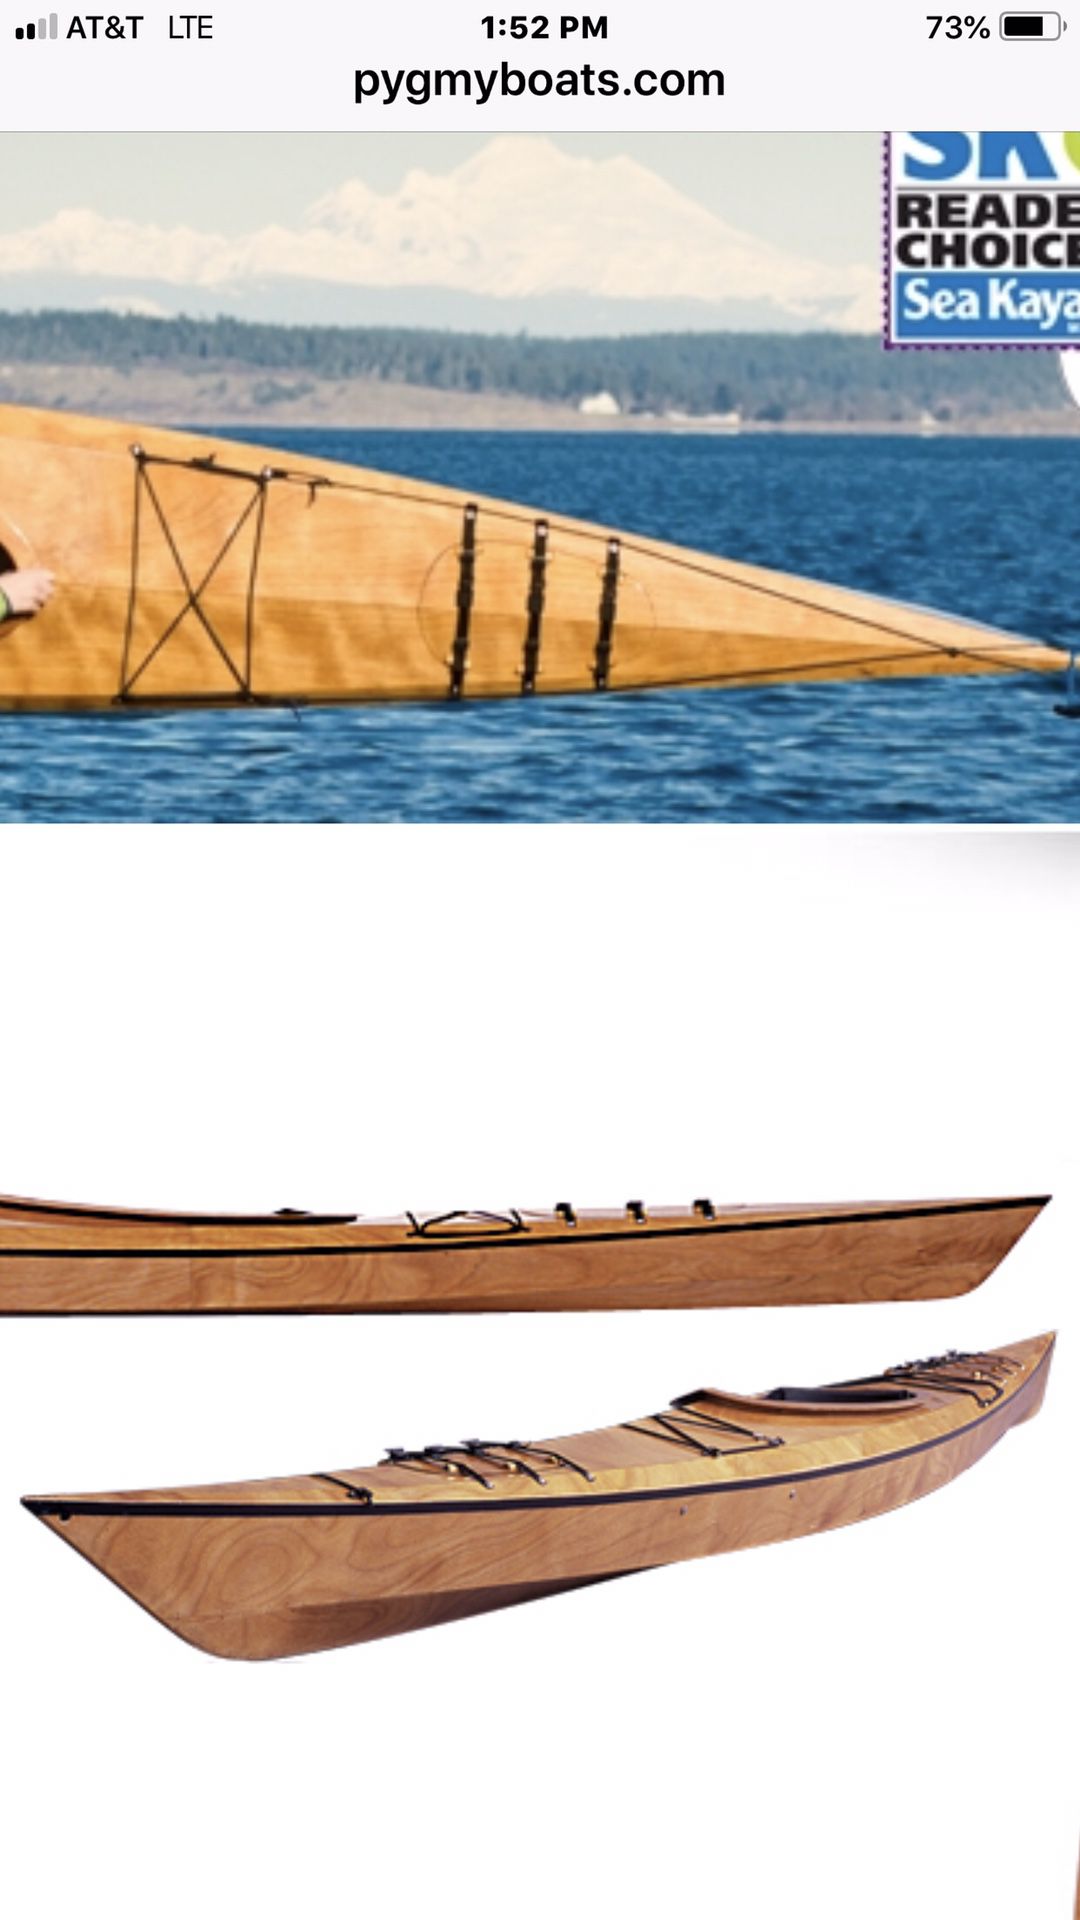 Kayak KIT Pygmy boat